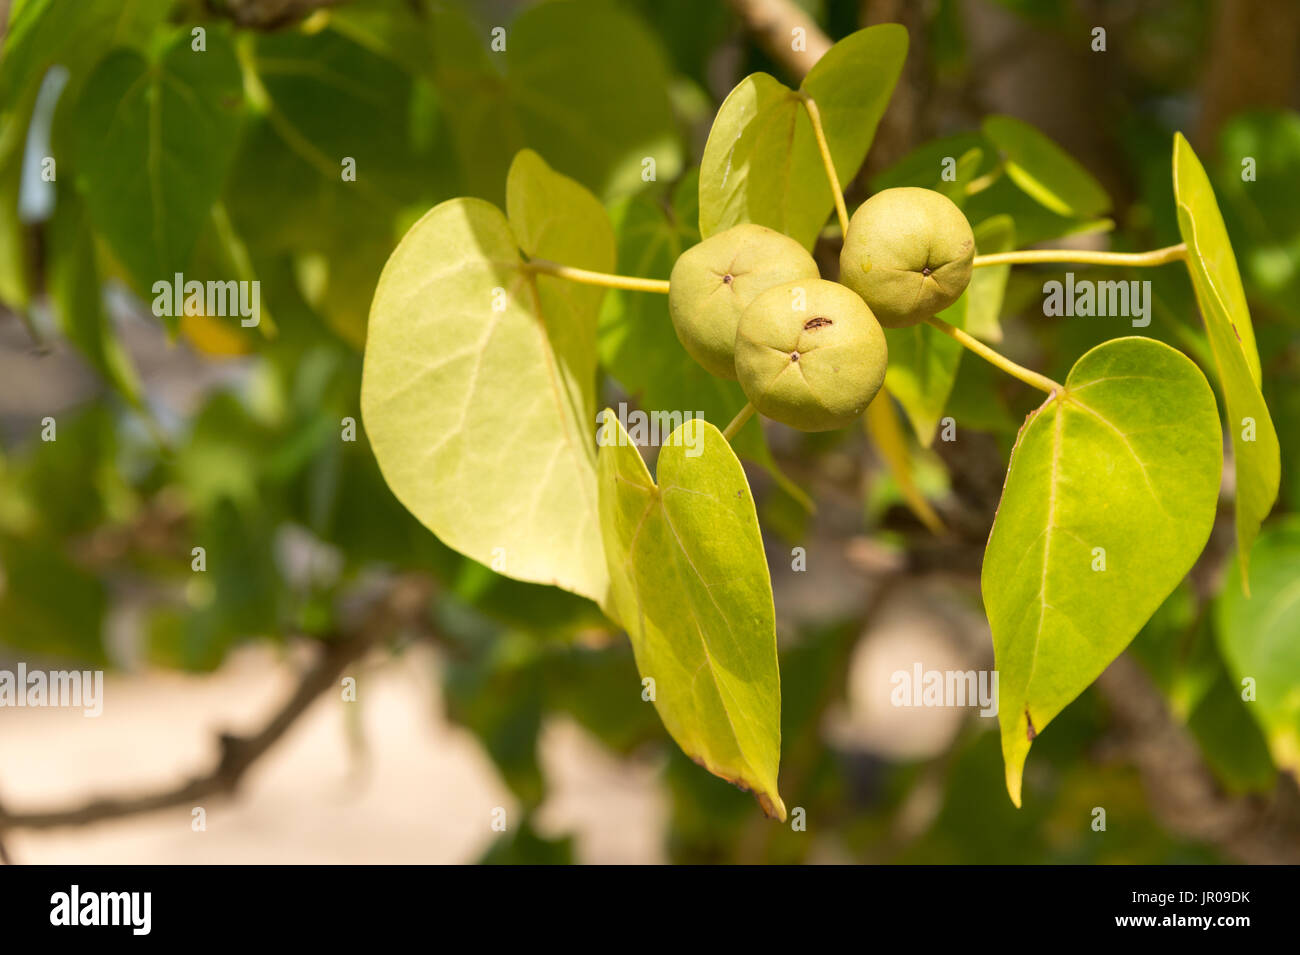 Thespesia Populnia (Catalpa) is easily confused with toxic Manchineel Tree (Hippomane mancinella) Stock Photo